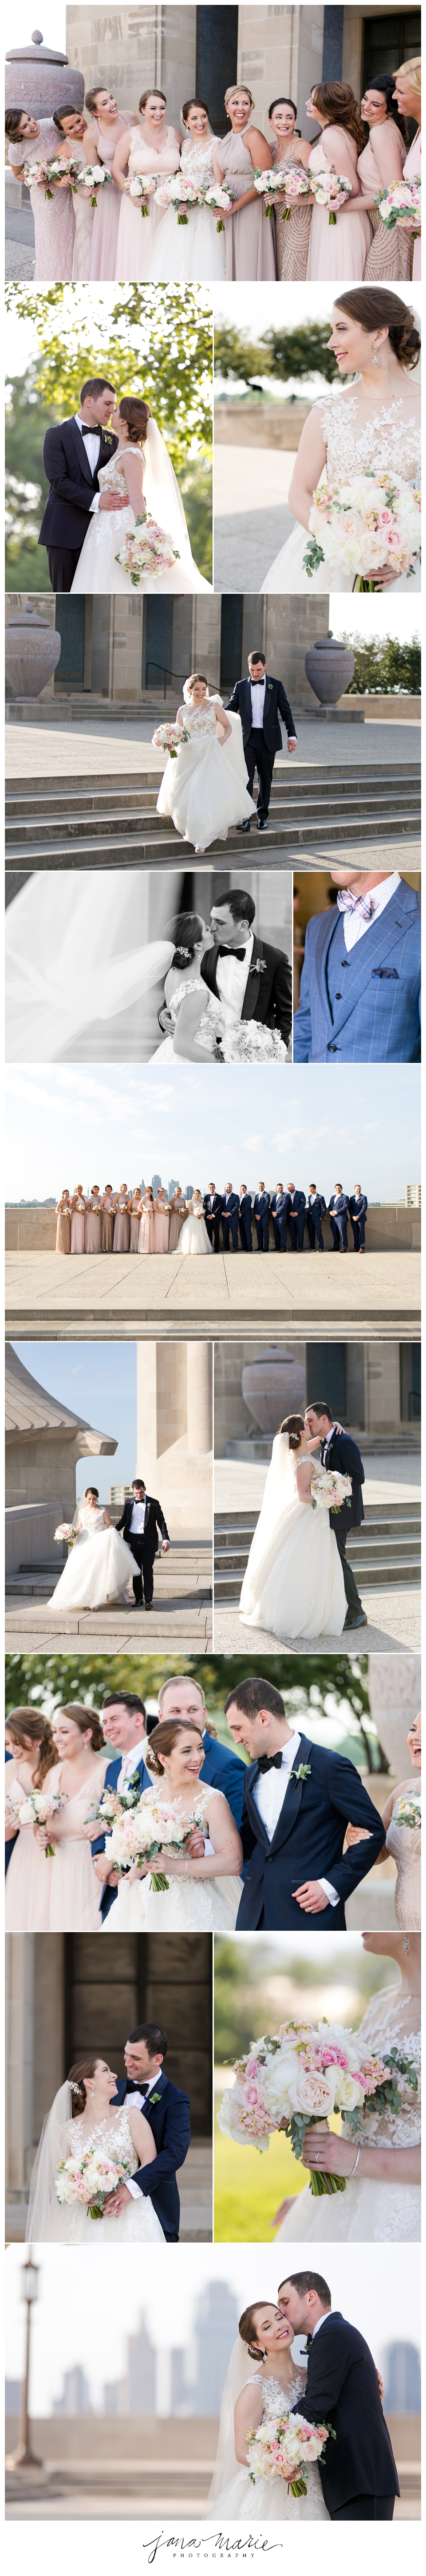 Hilton President, Colonnial Church, Kansas City wedding, Summer wedding, Jessica & Jeff, Good Earth Floral